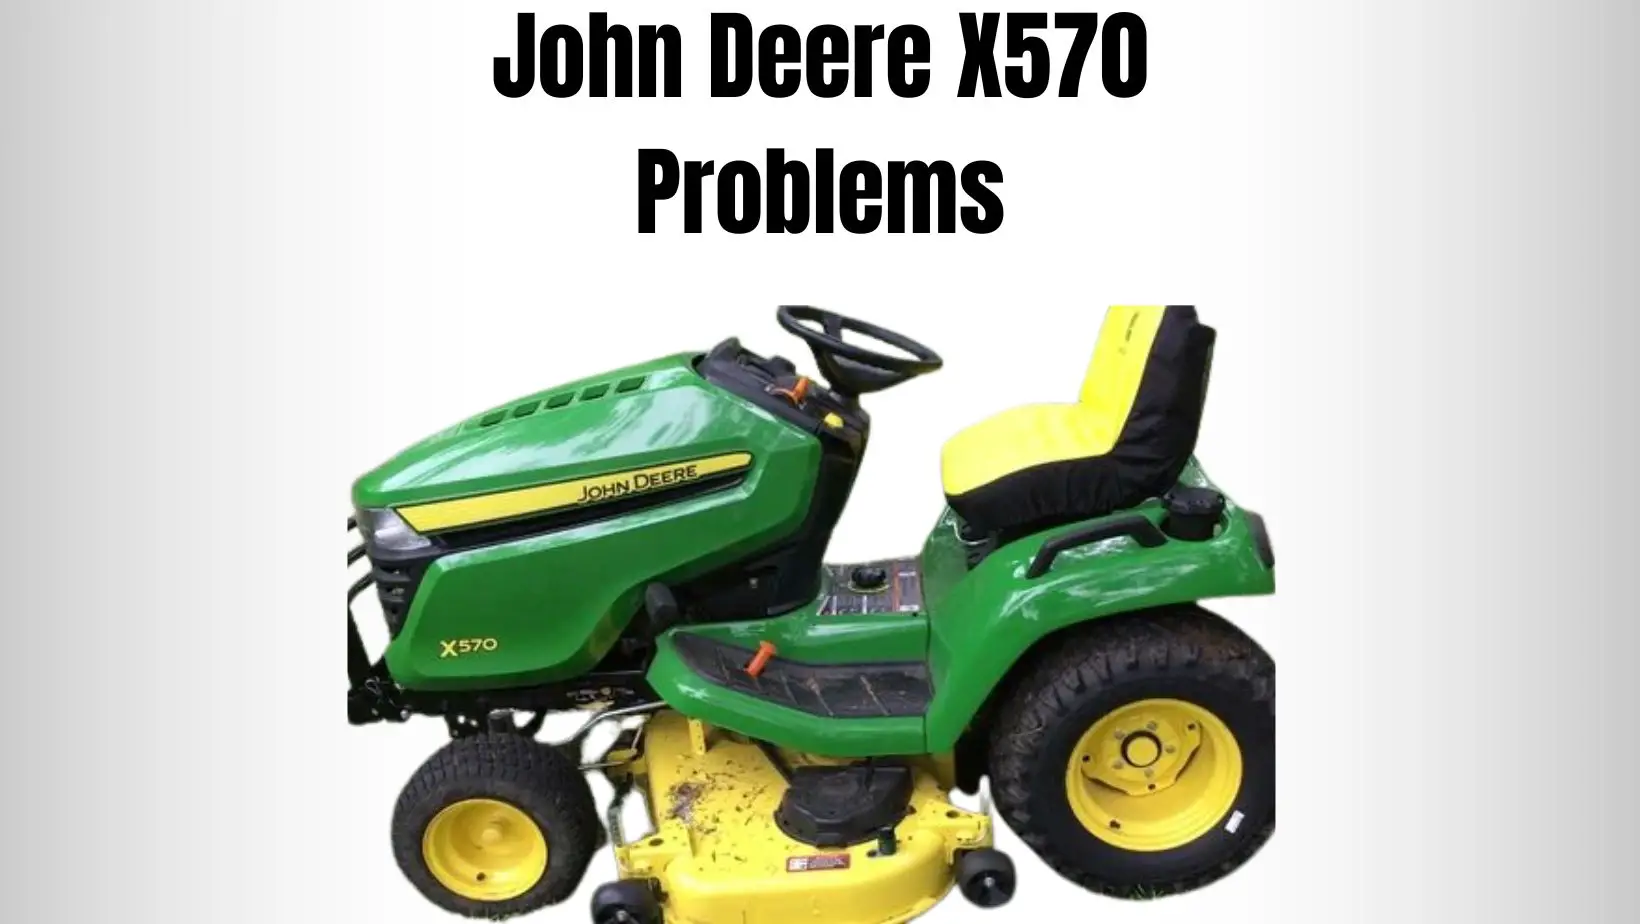 John Deere X570 Problems